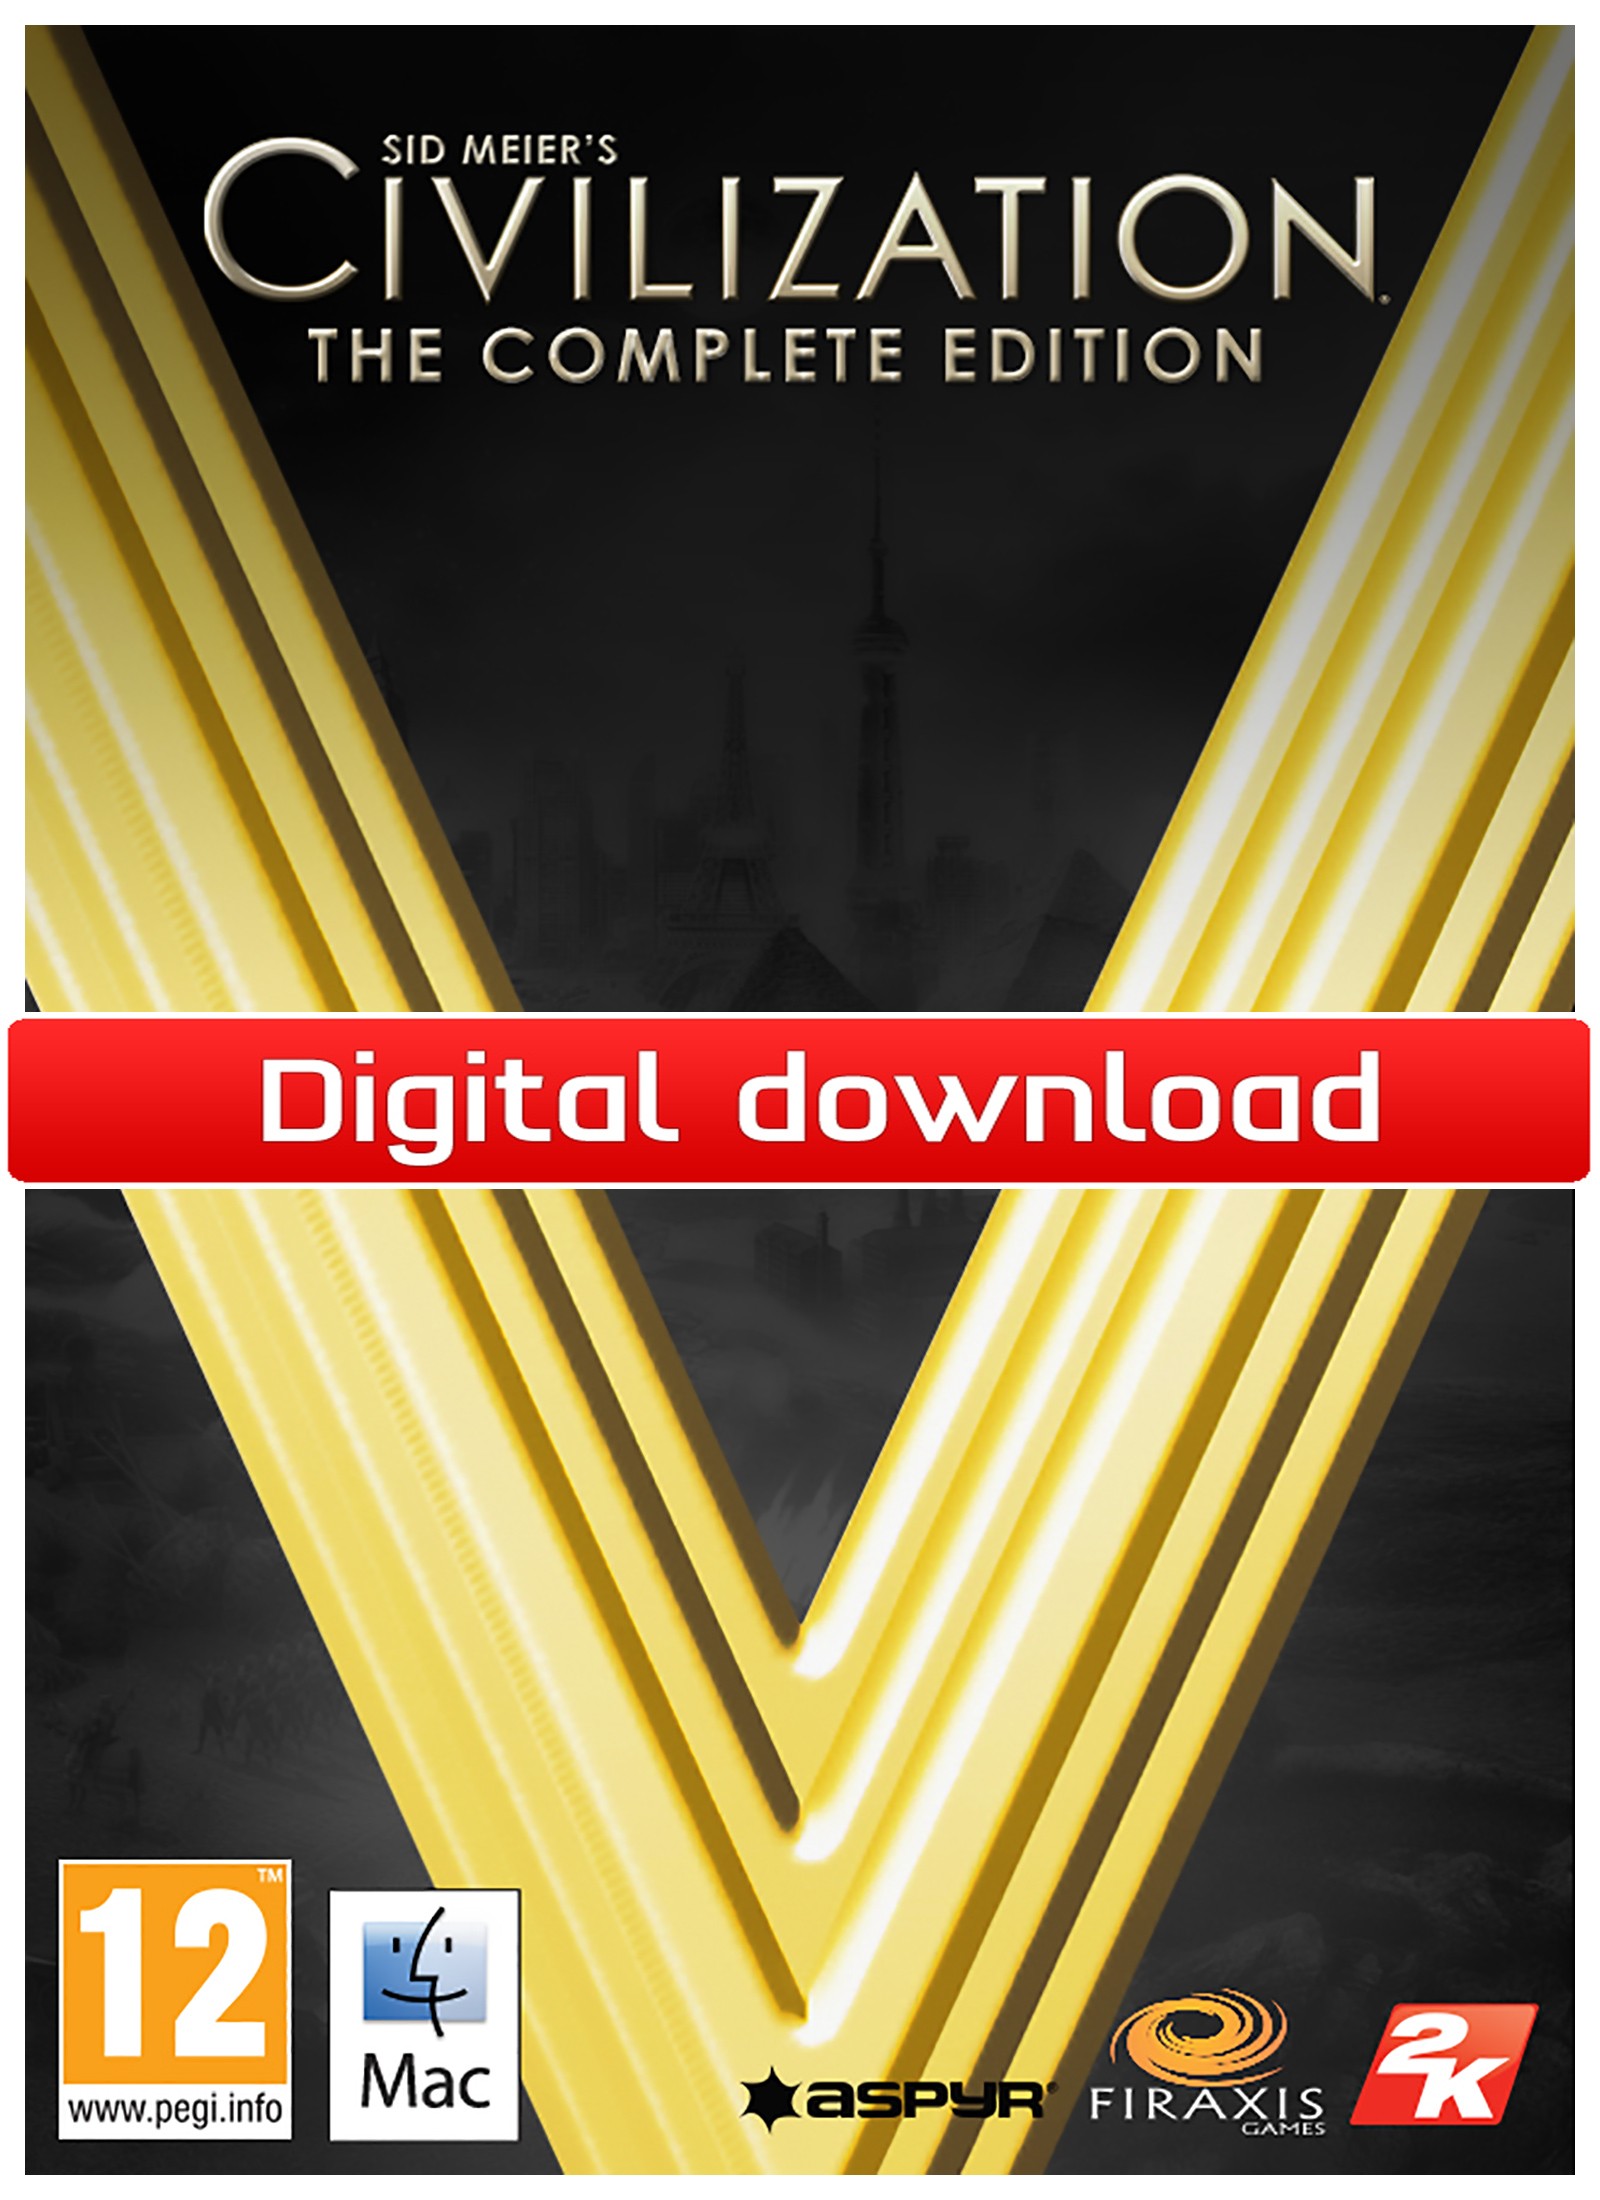 Civilization 3 complete mac download windows 10